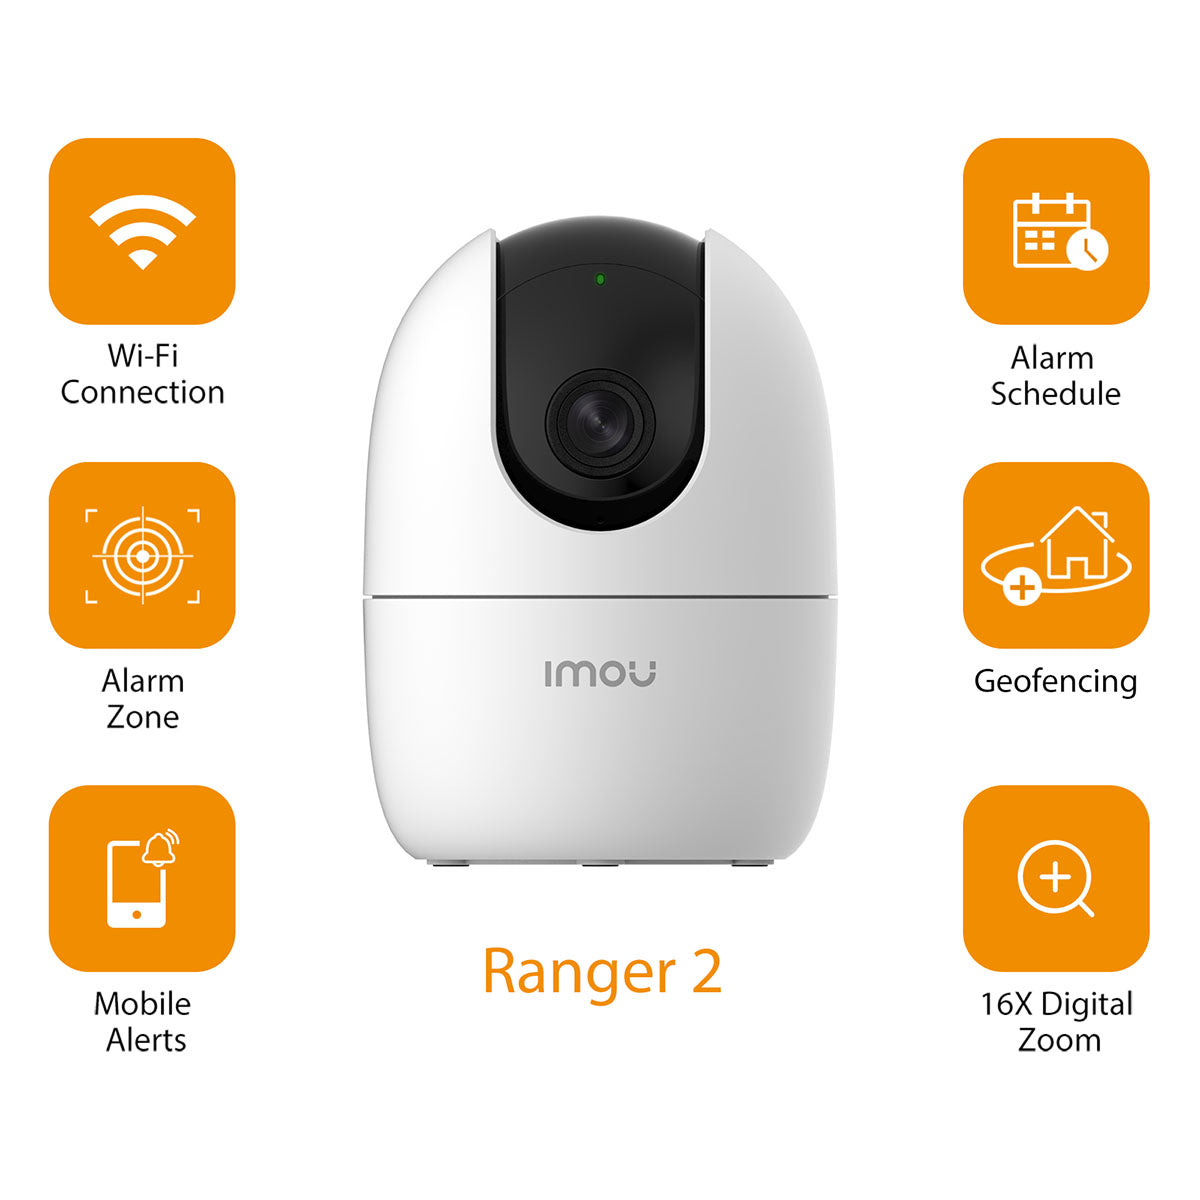 Imou-Ranger-2-1080p-plus-Imou-64gb-micro-sdxc-card-Product-Features1-CC470-1-ipc-a22ep-g